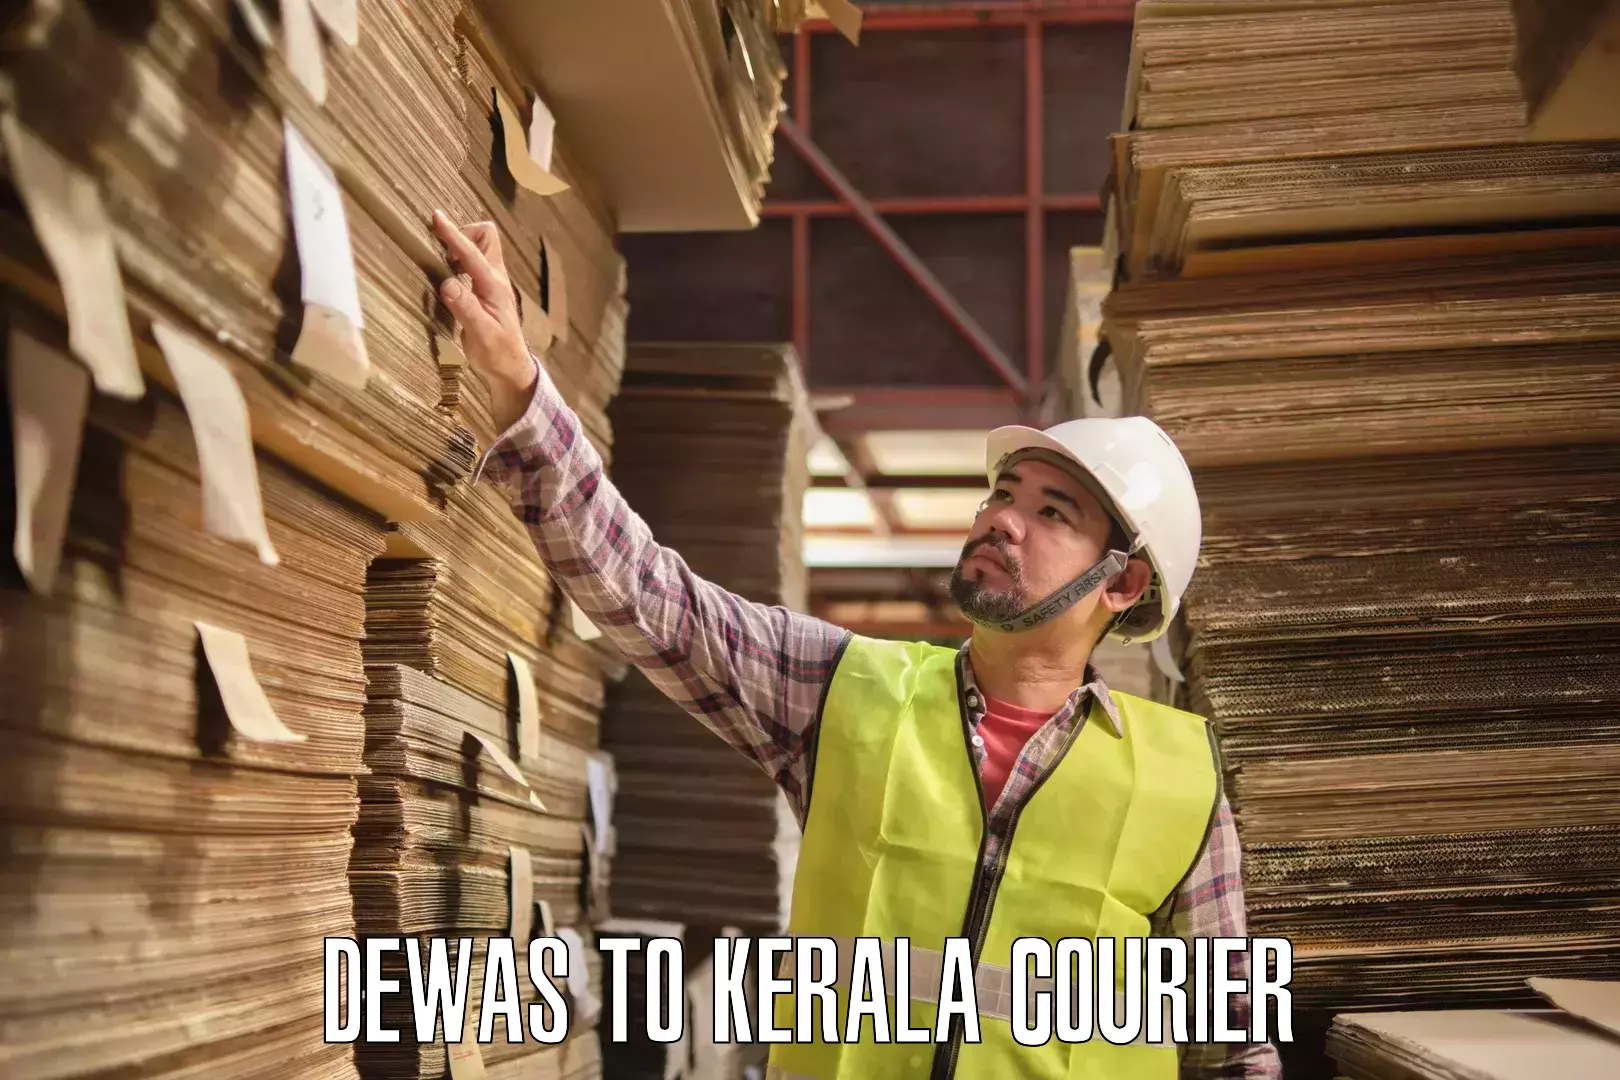 Reliable courier service Dewas to Kerala